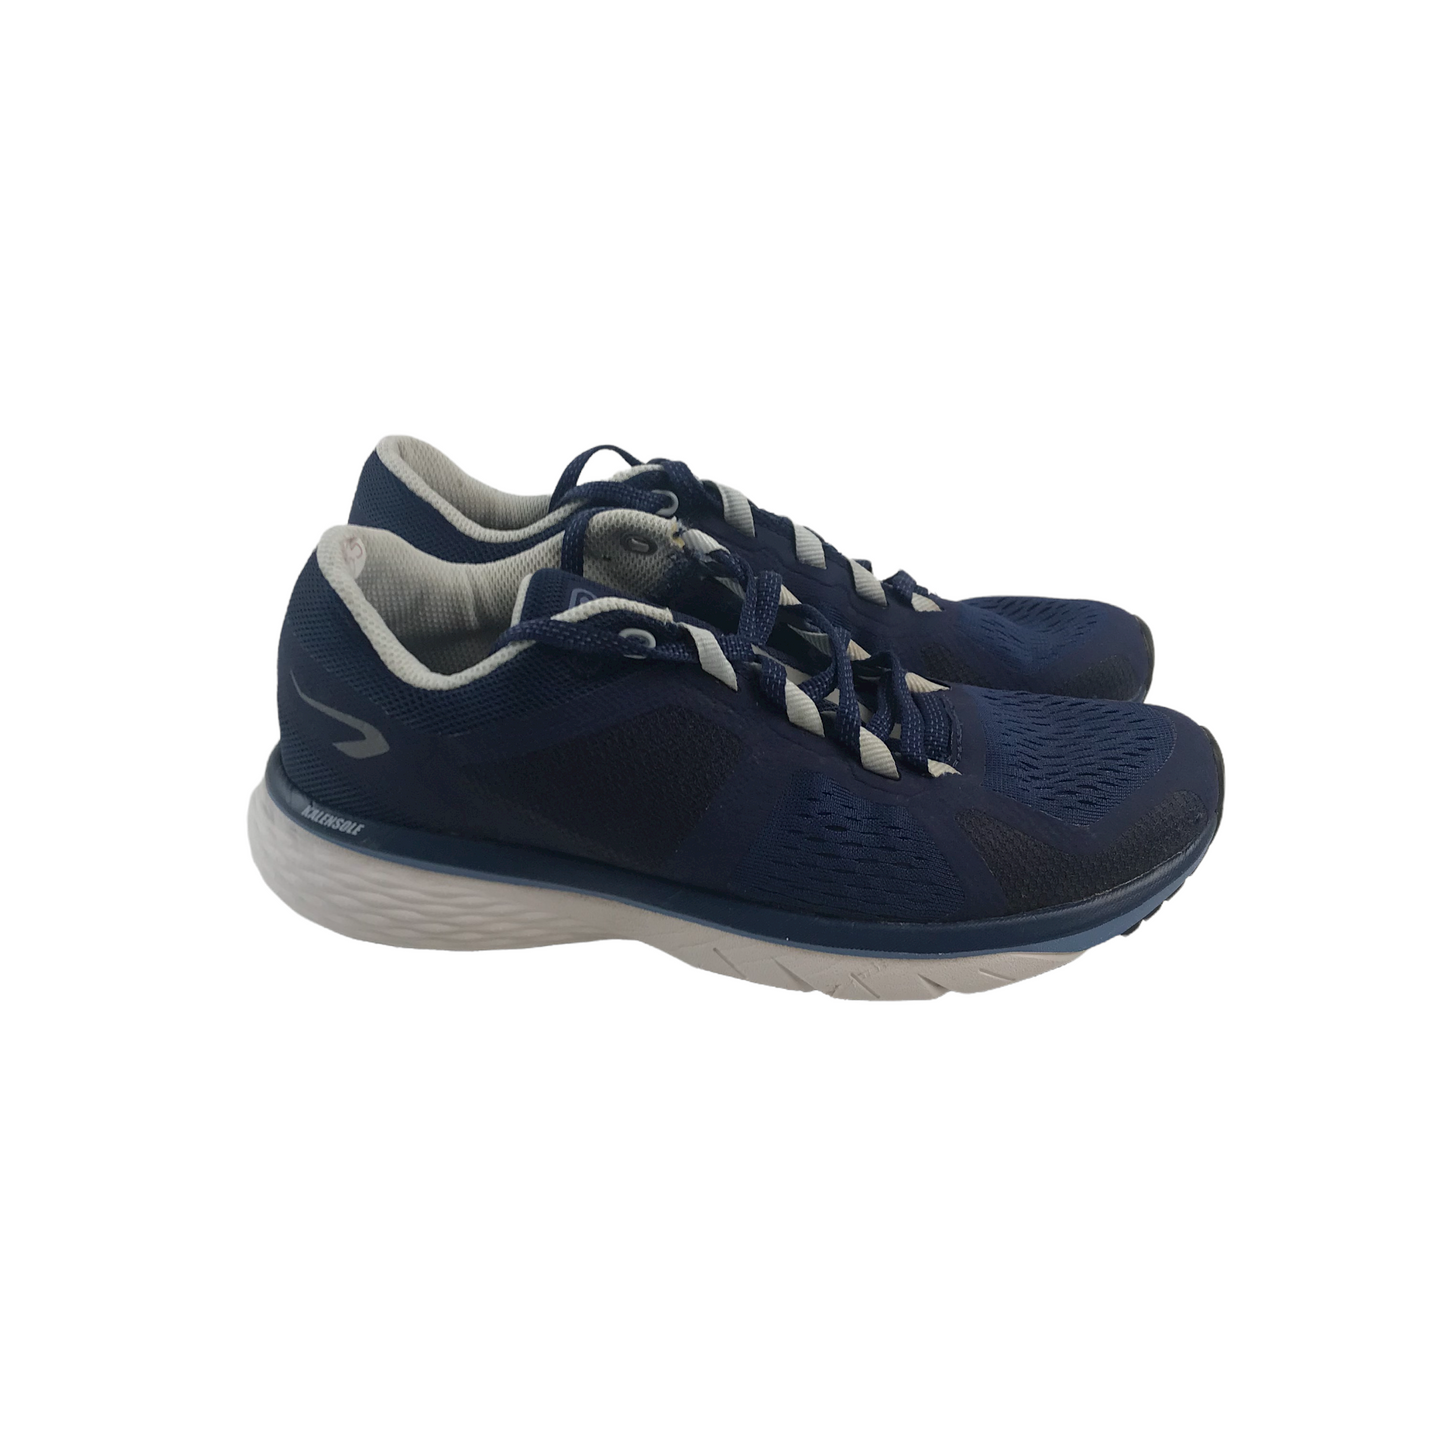 Kalenji Navy Blue Trainers Shoe Size 5.5